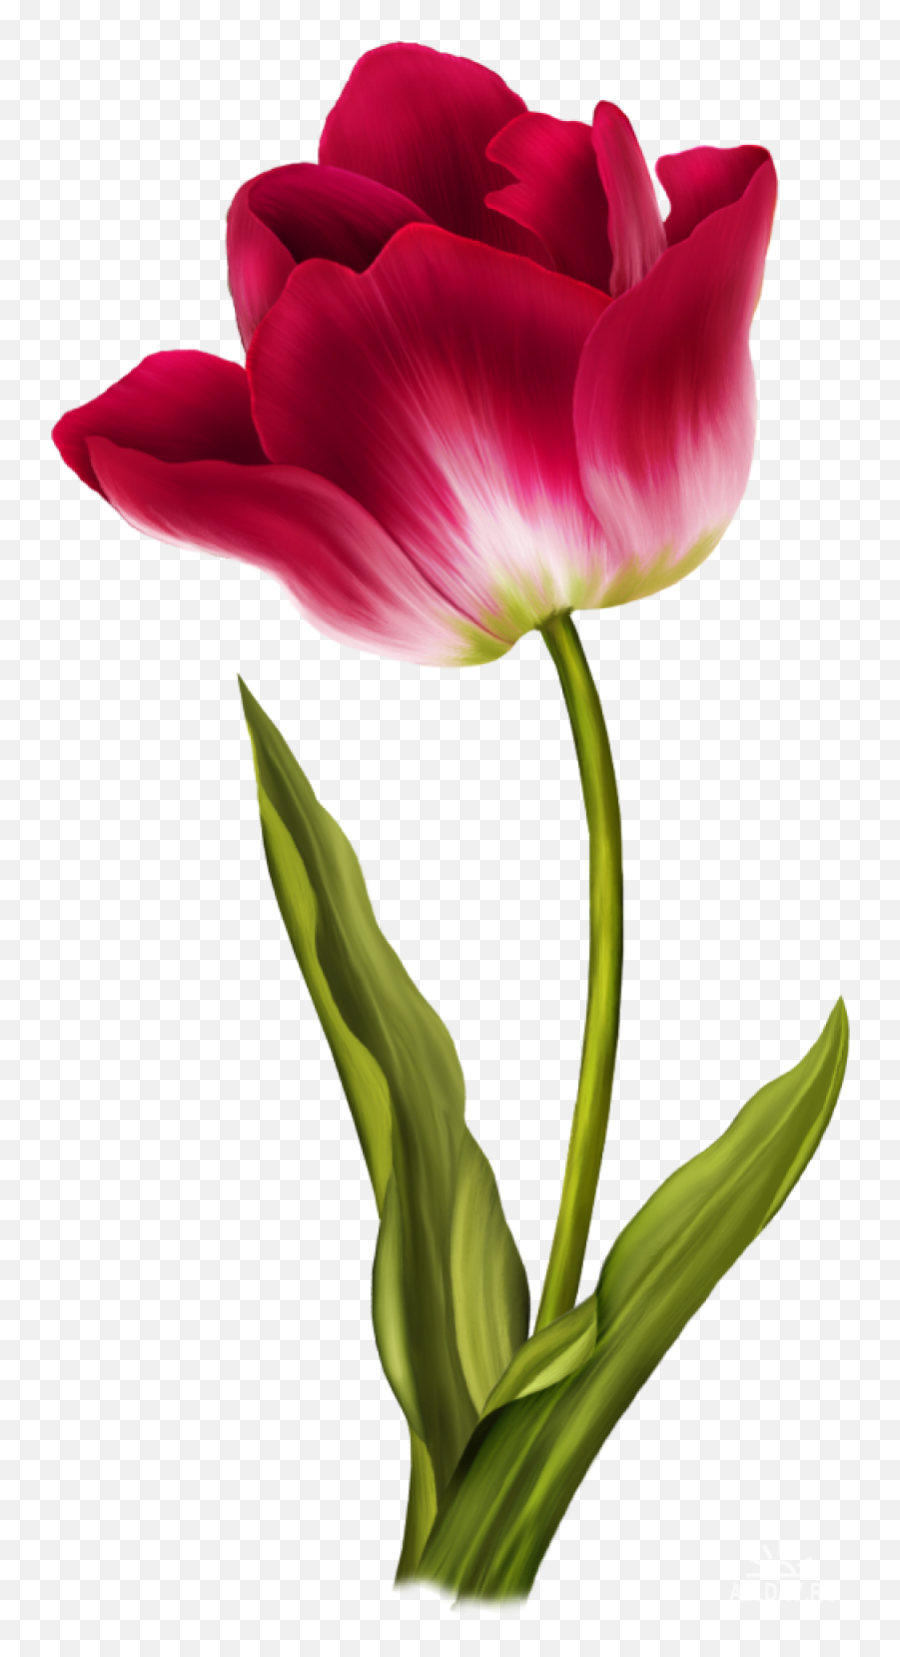 Tulip Png Image - Purepng Free Transparent Cc0 Png Image Tulip Colour Pencil Drawing,Tulips Transparent Background